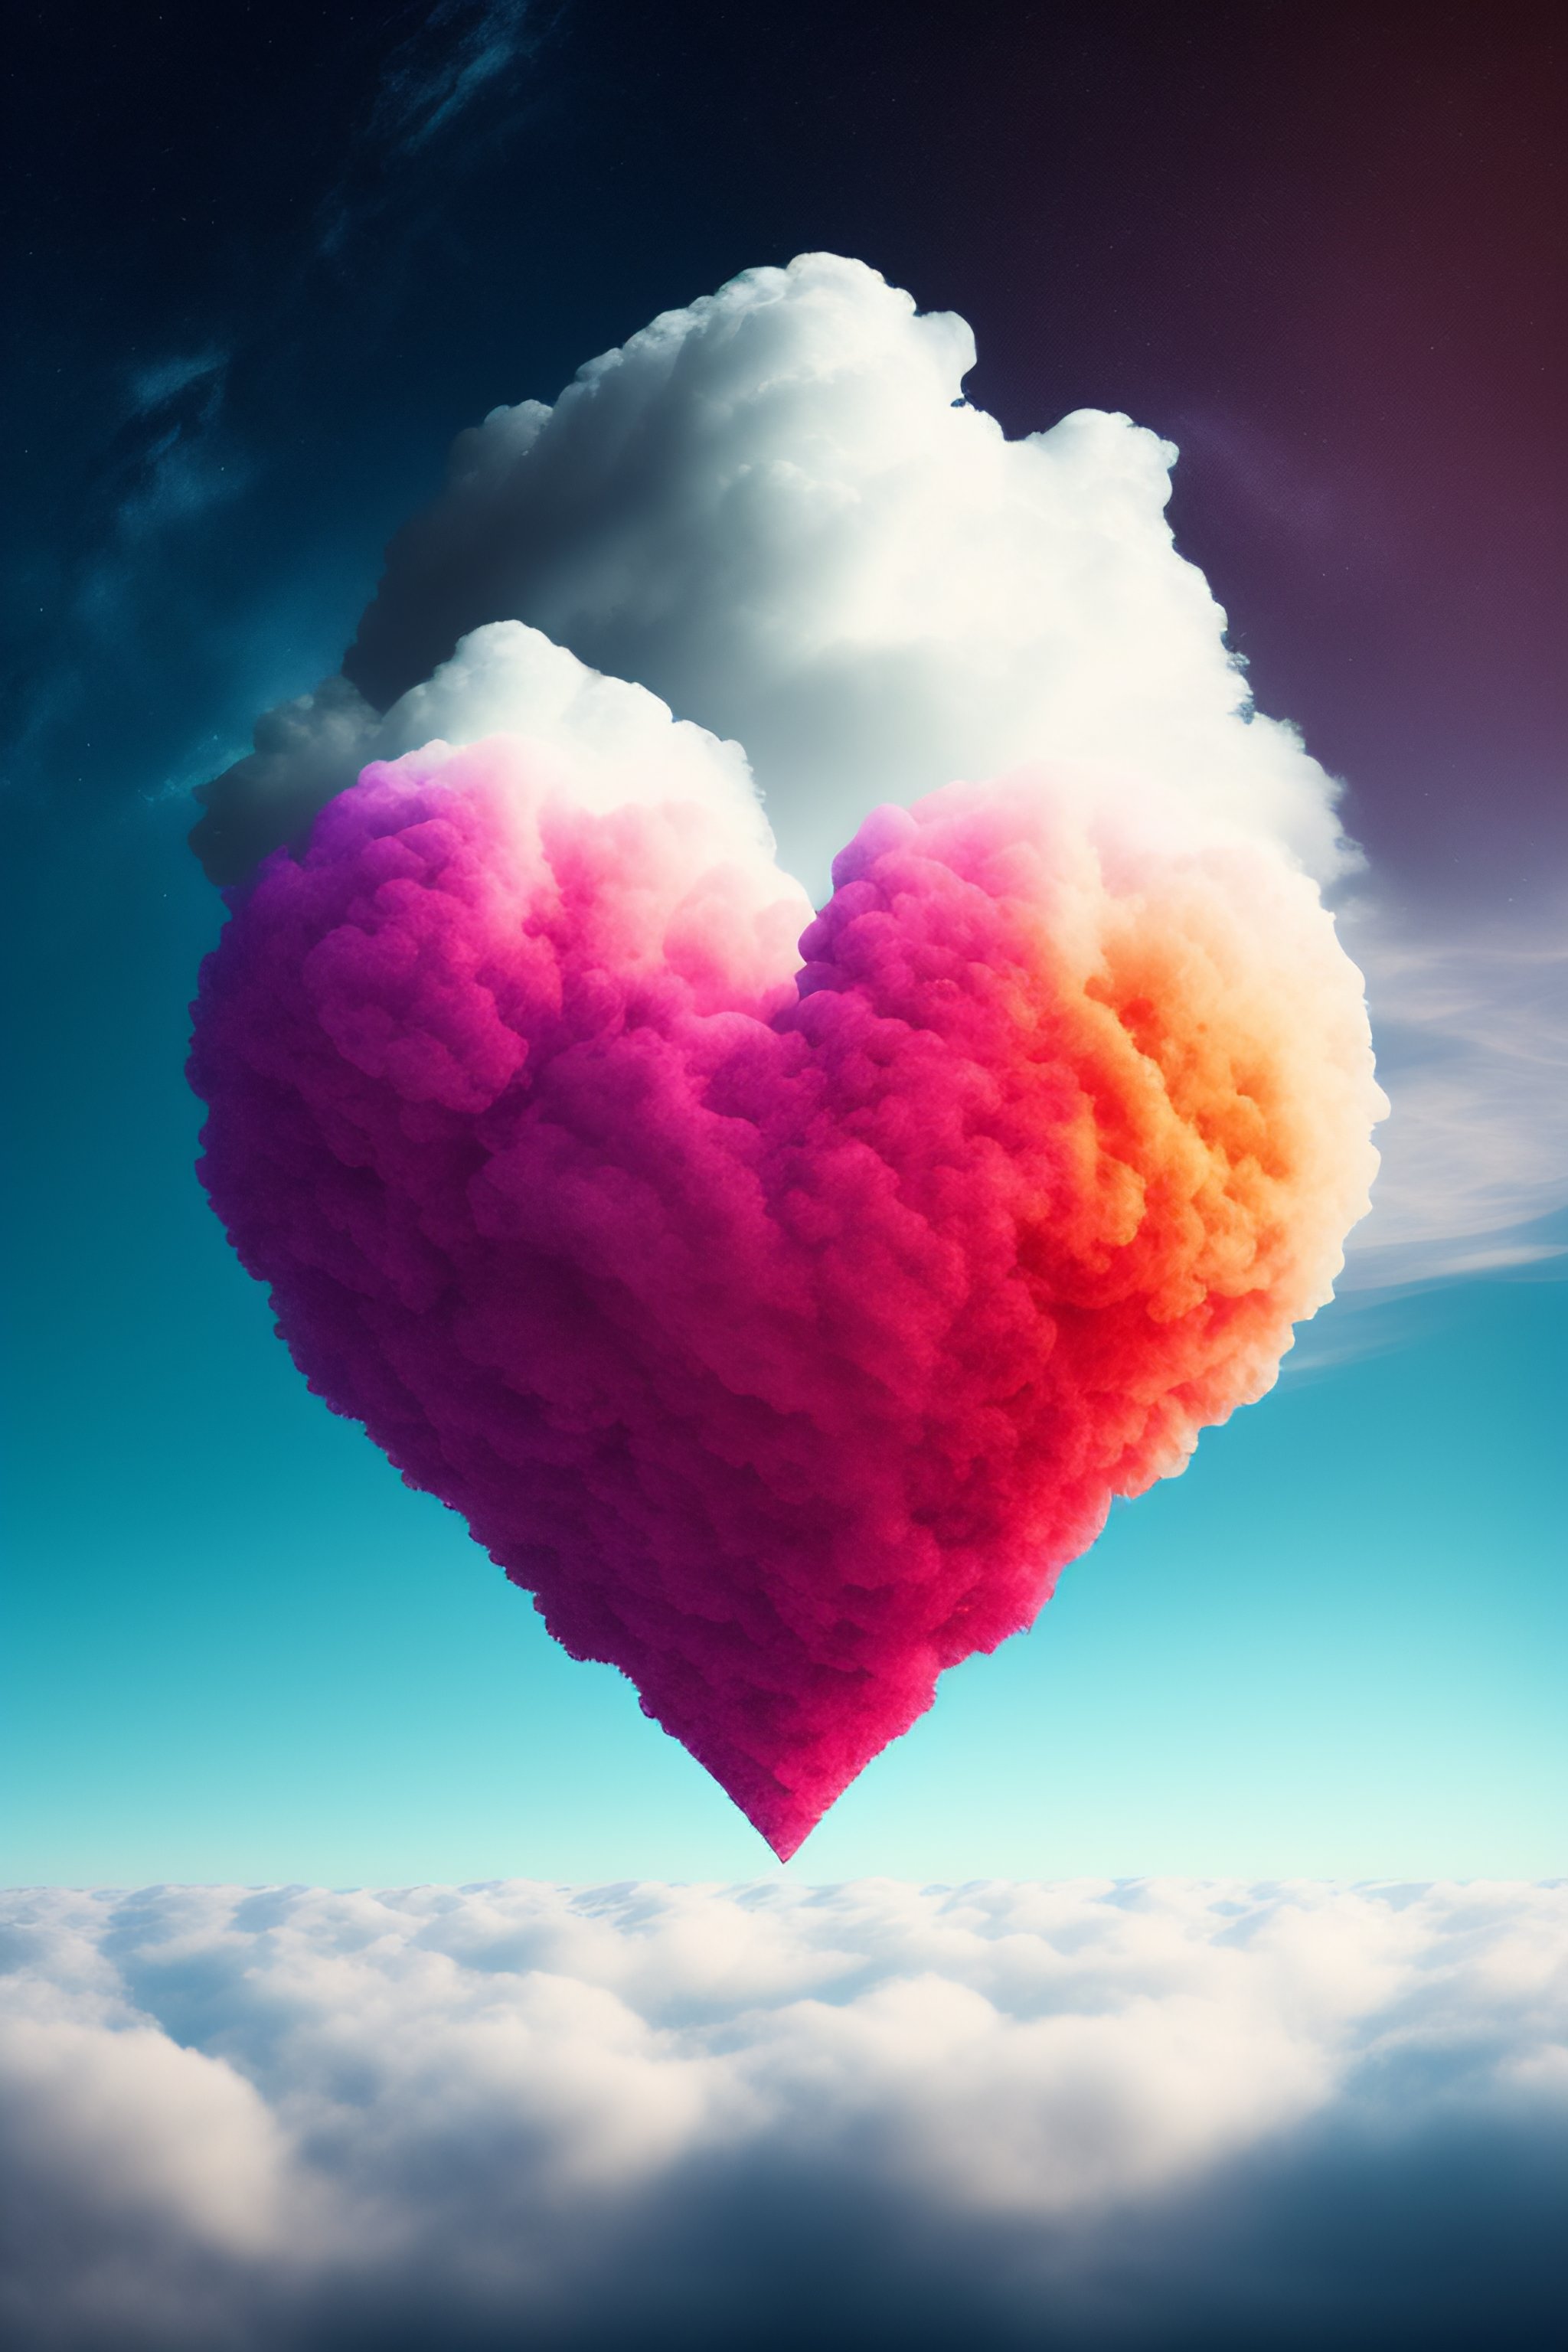 Lexica - Album cover art of a cloud that is shaped as a Broken Heart